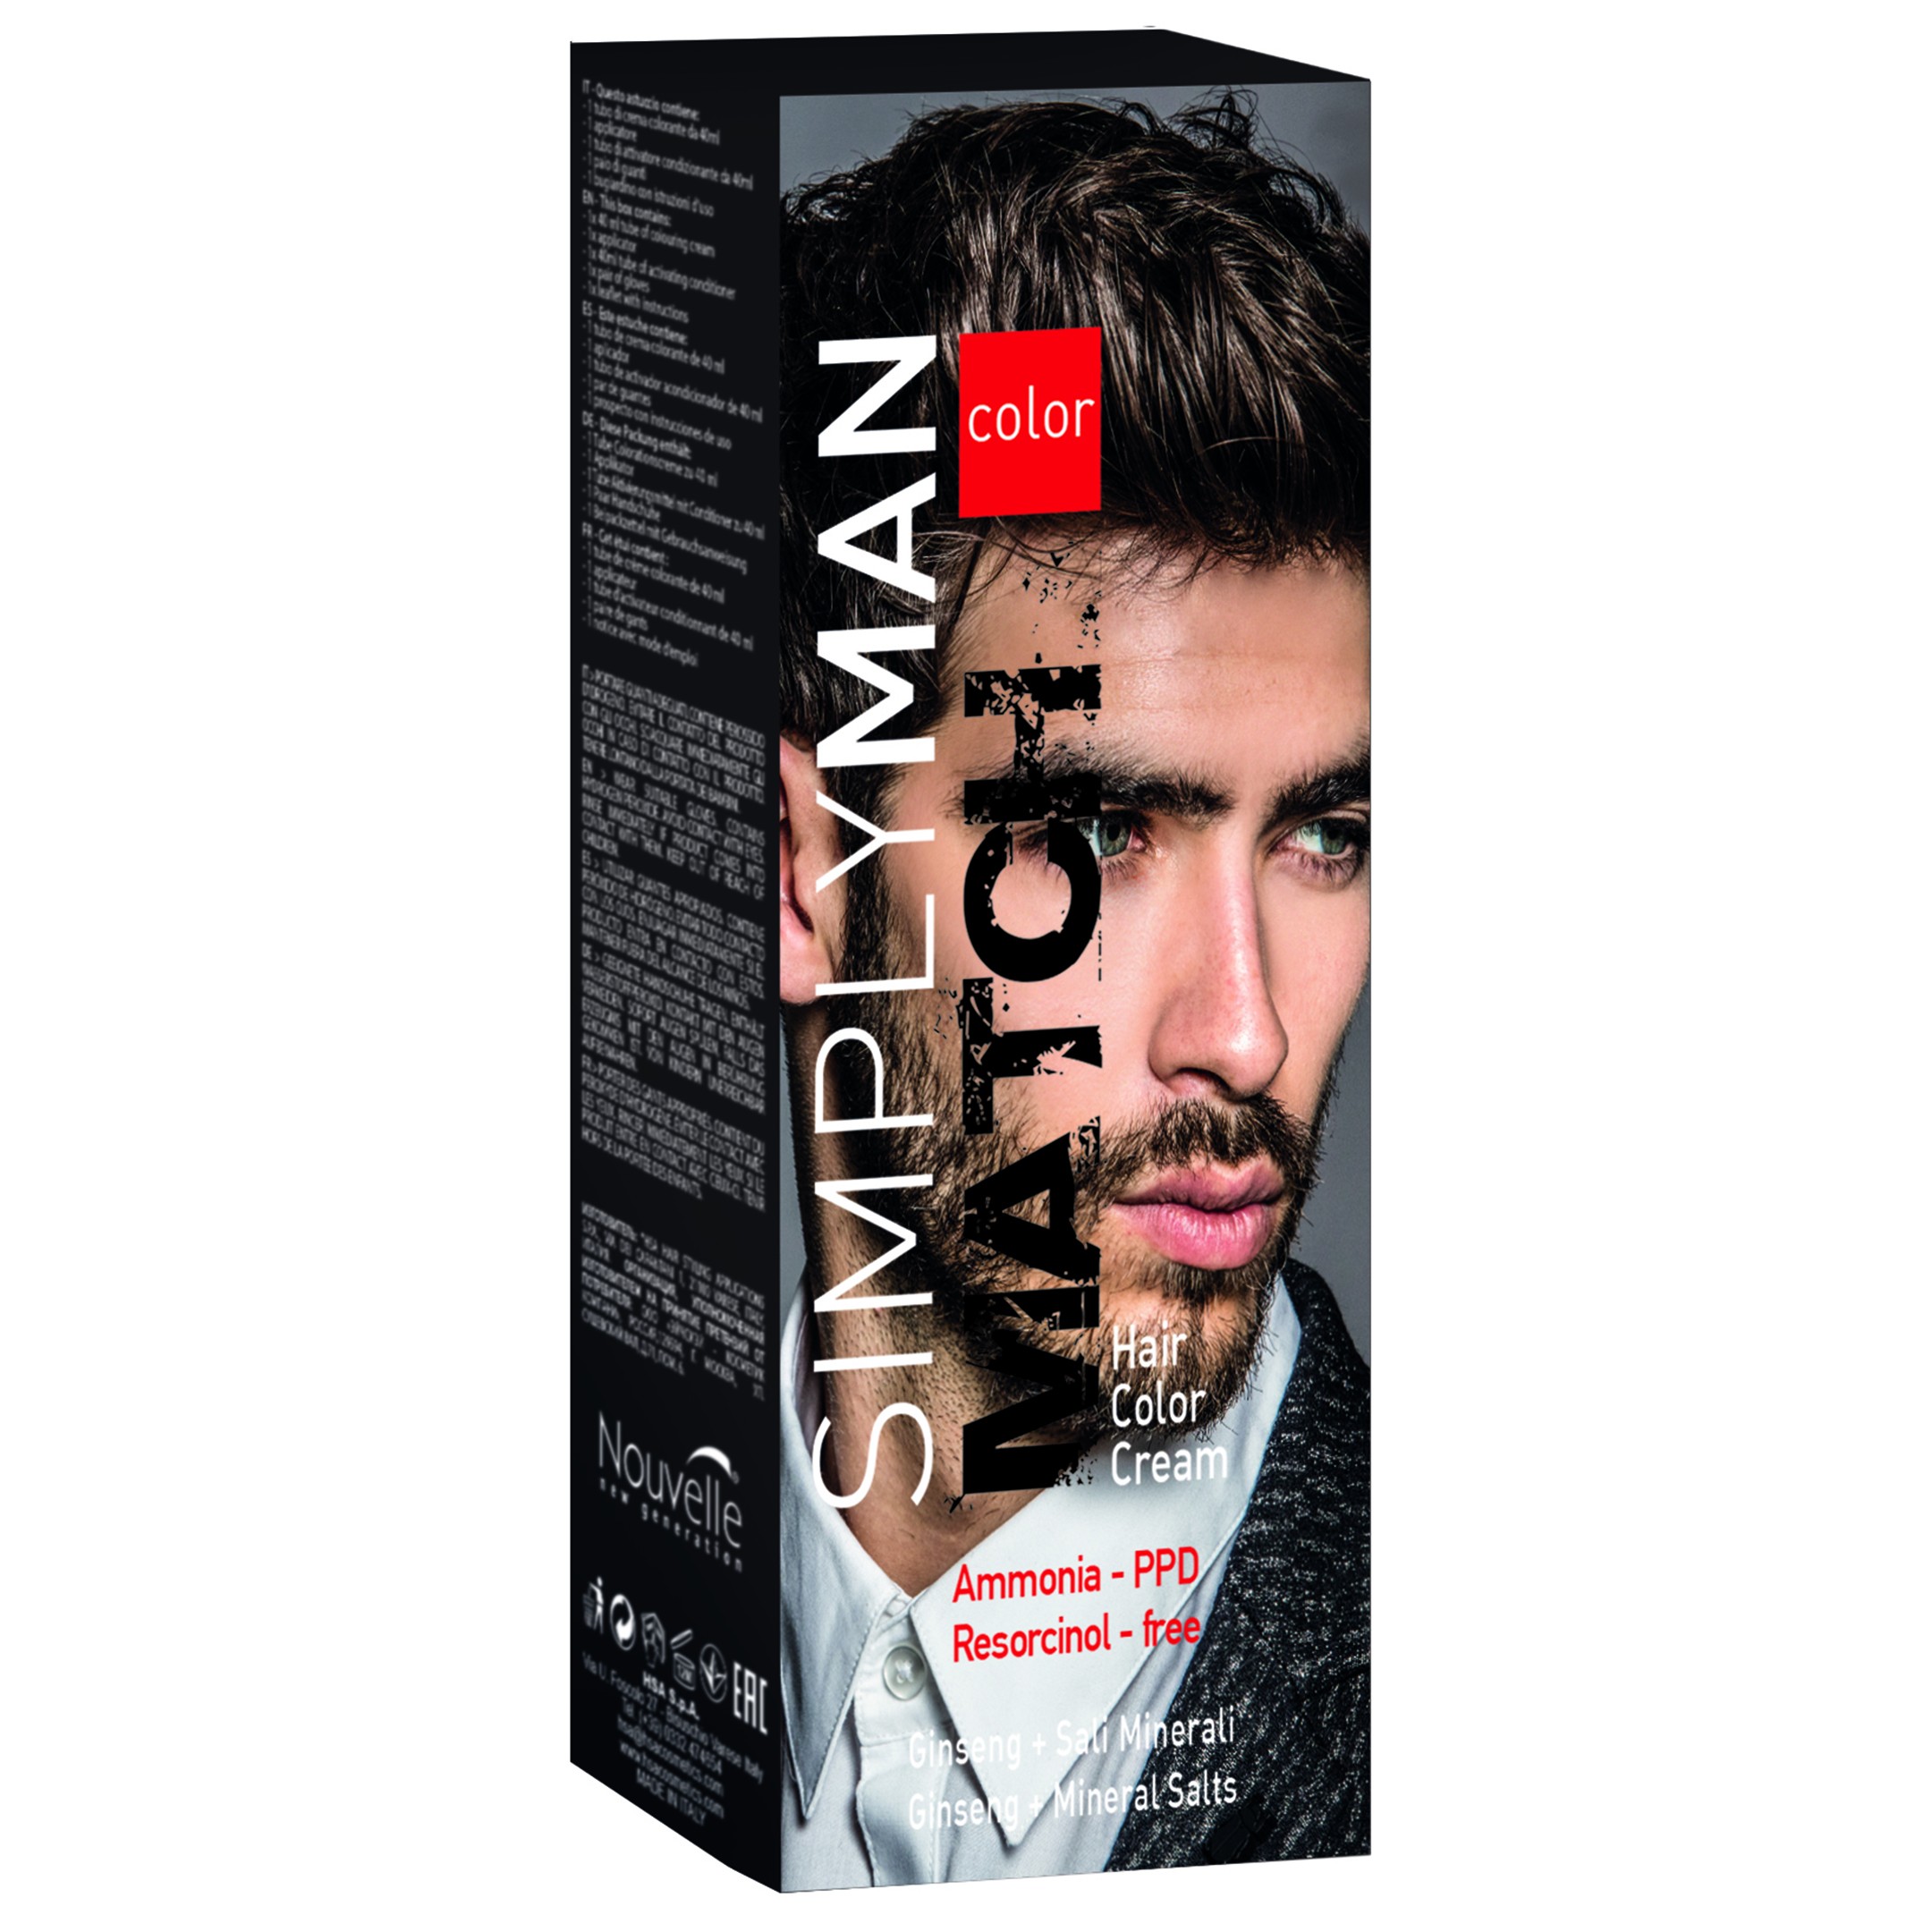 Simply Man Hair Dye Kit - Black | INDERWEAR